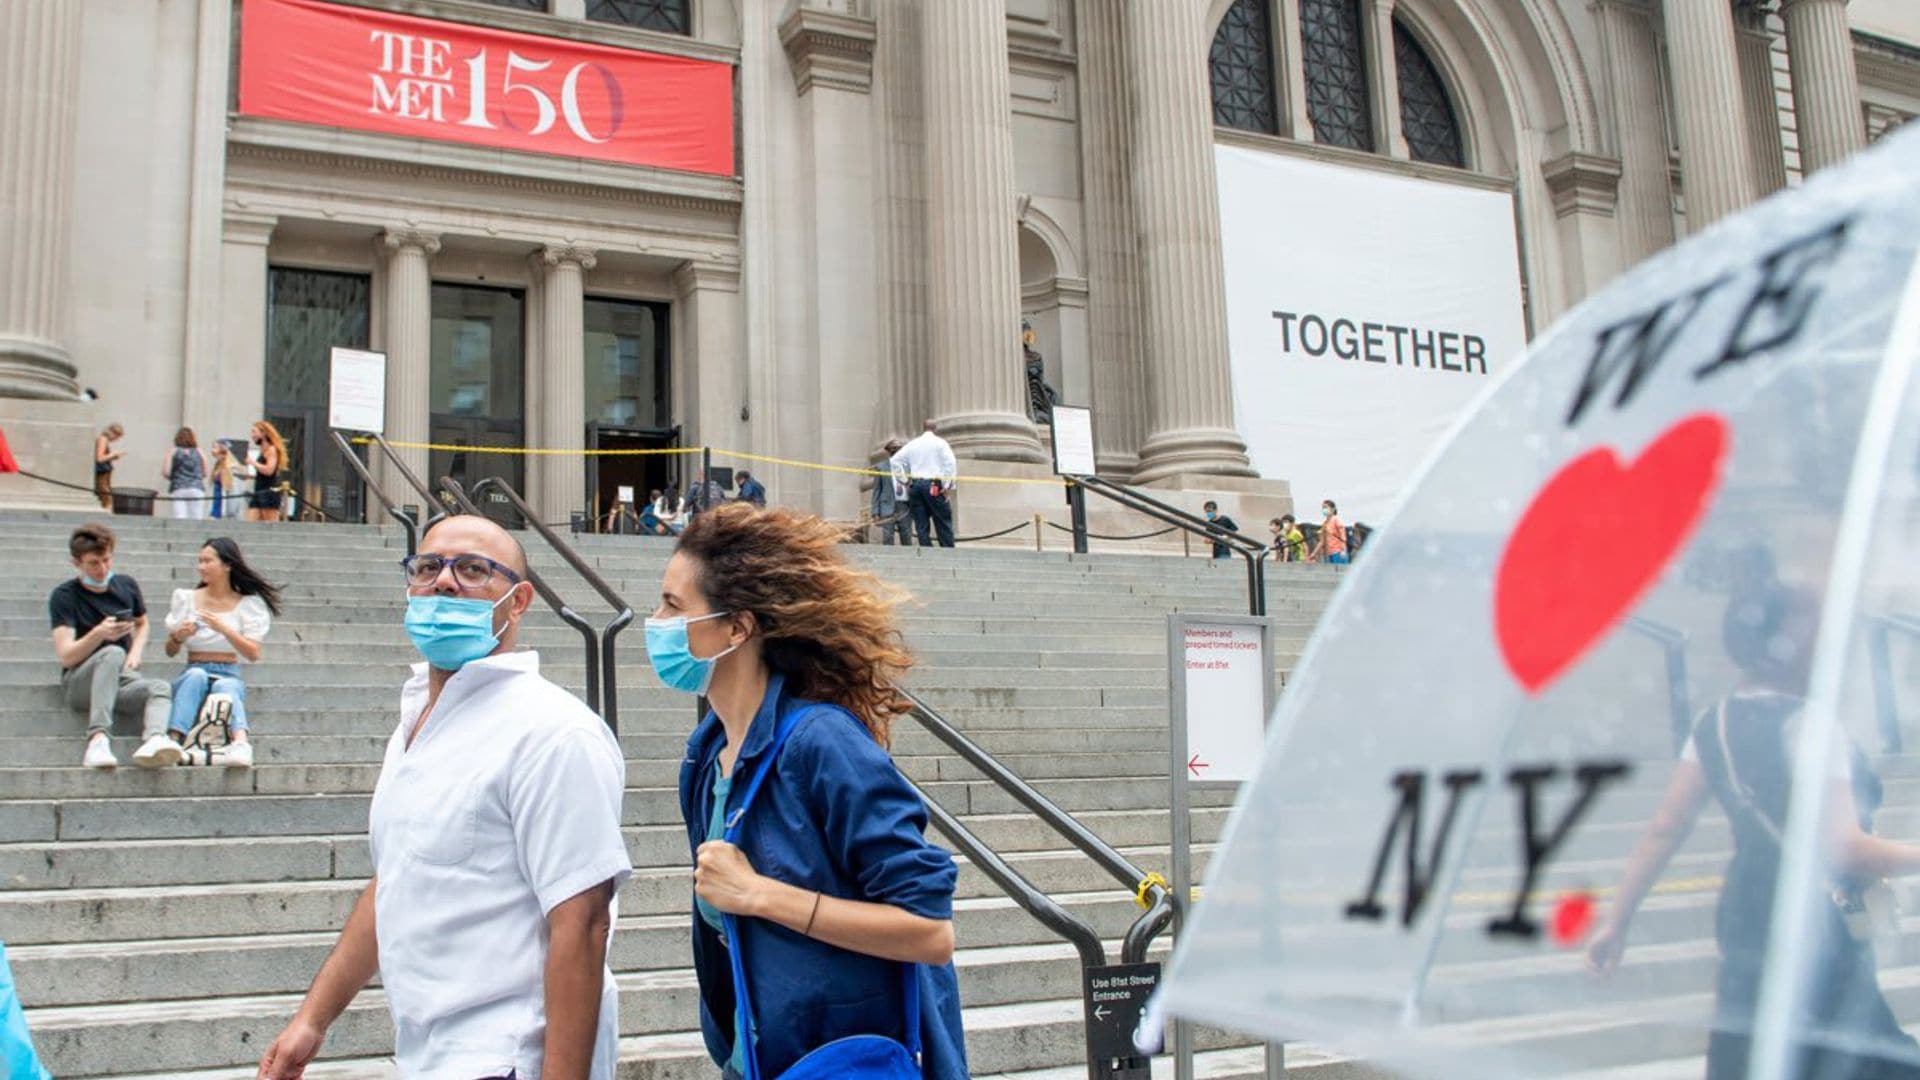 The Metropolitan Museum of Art reopened its doors amid the coronavirus pandemic